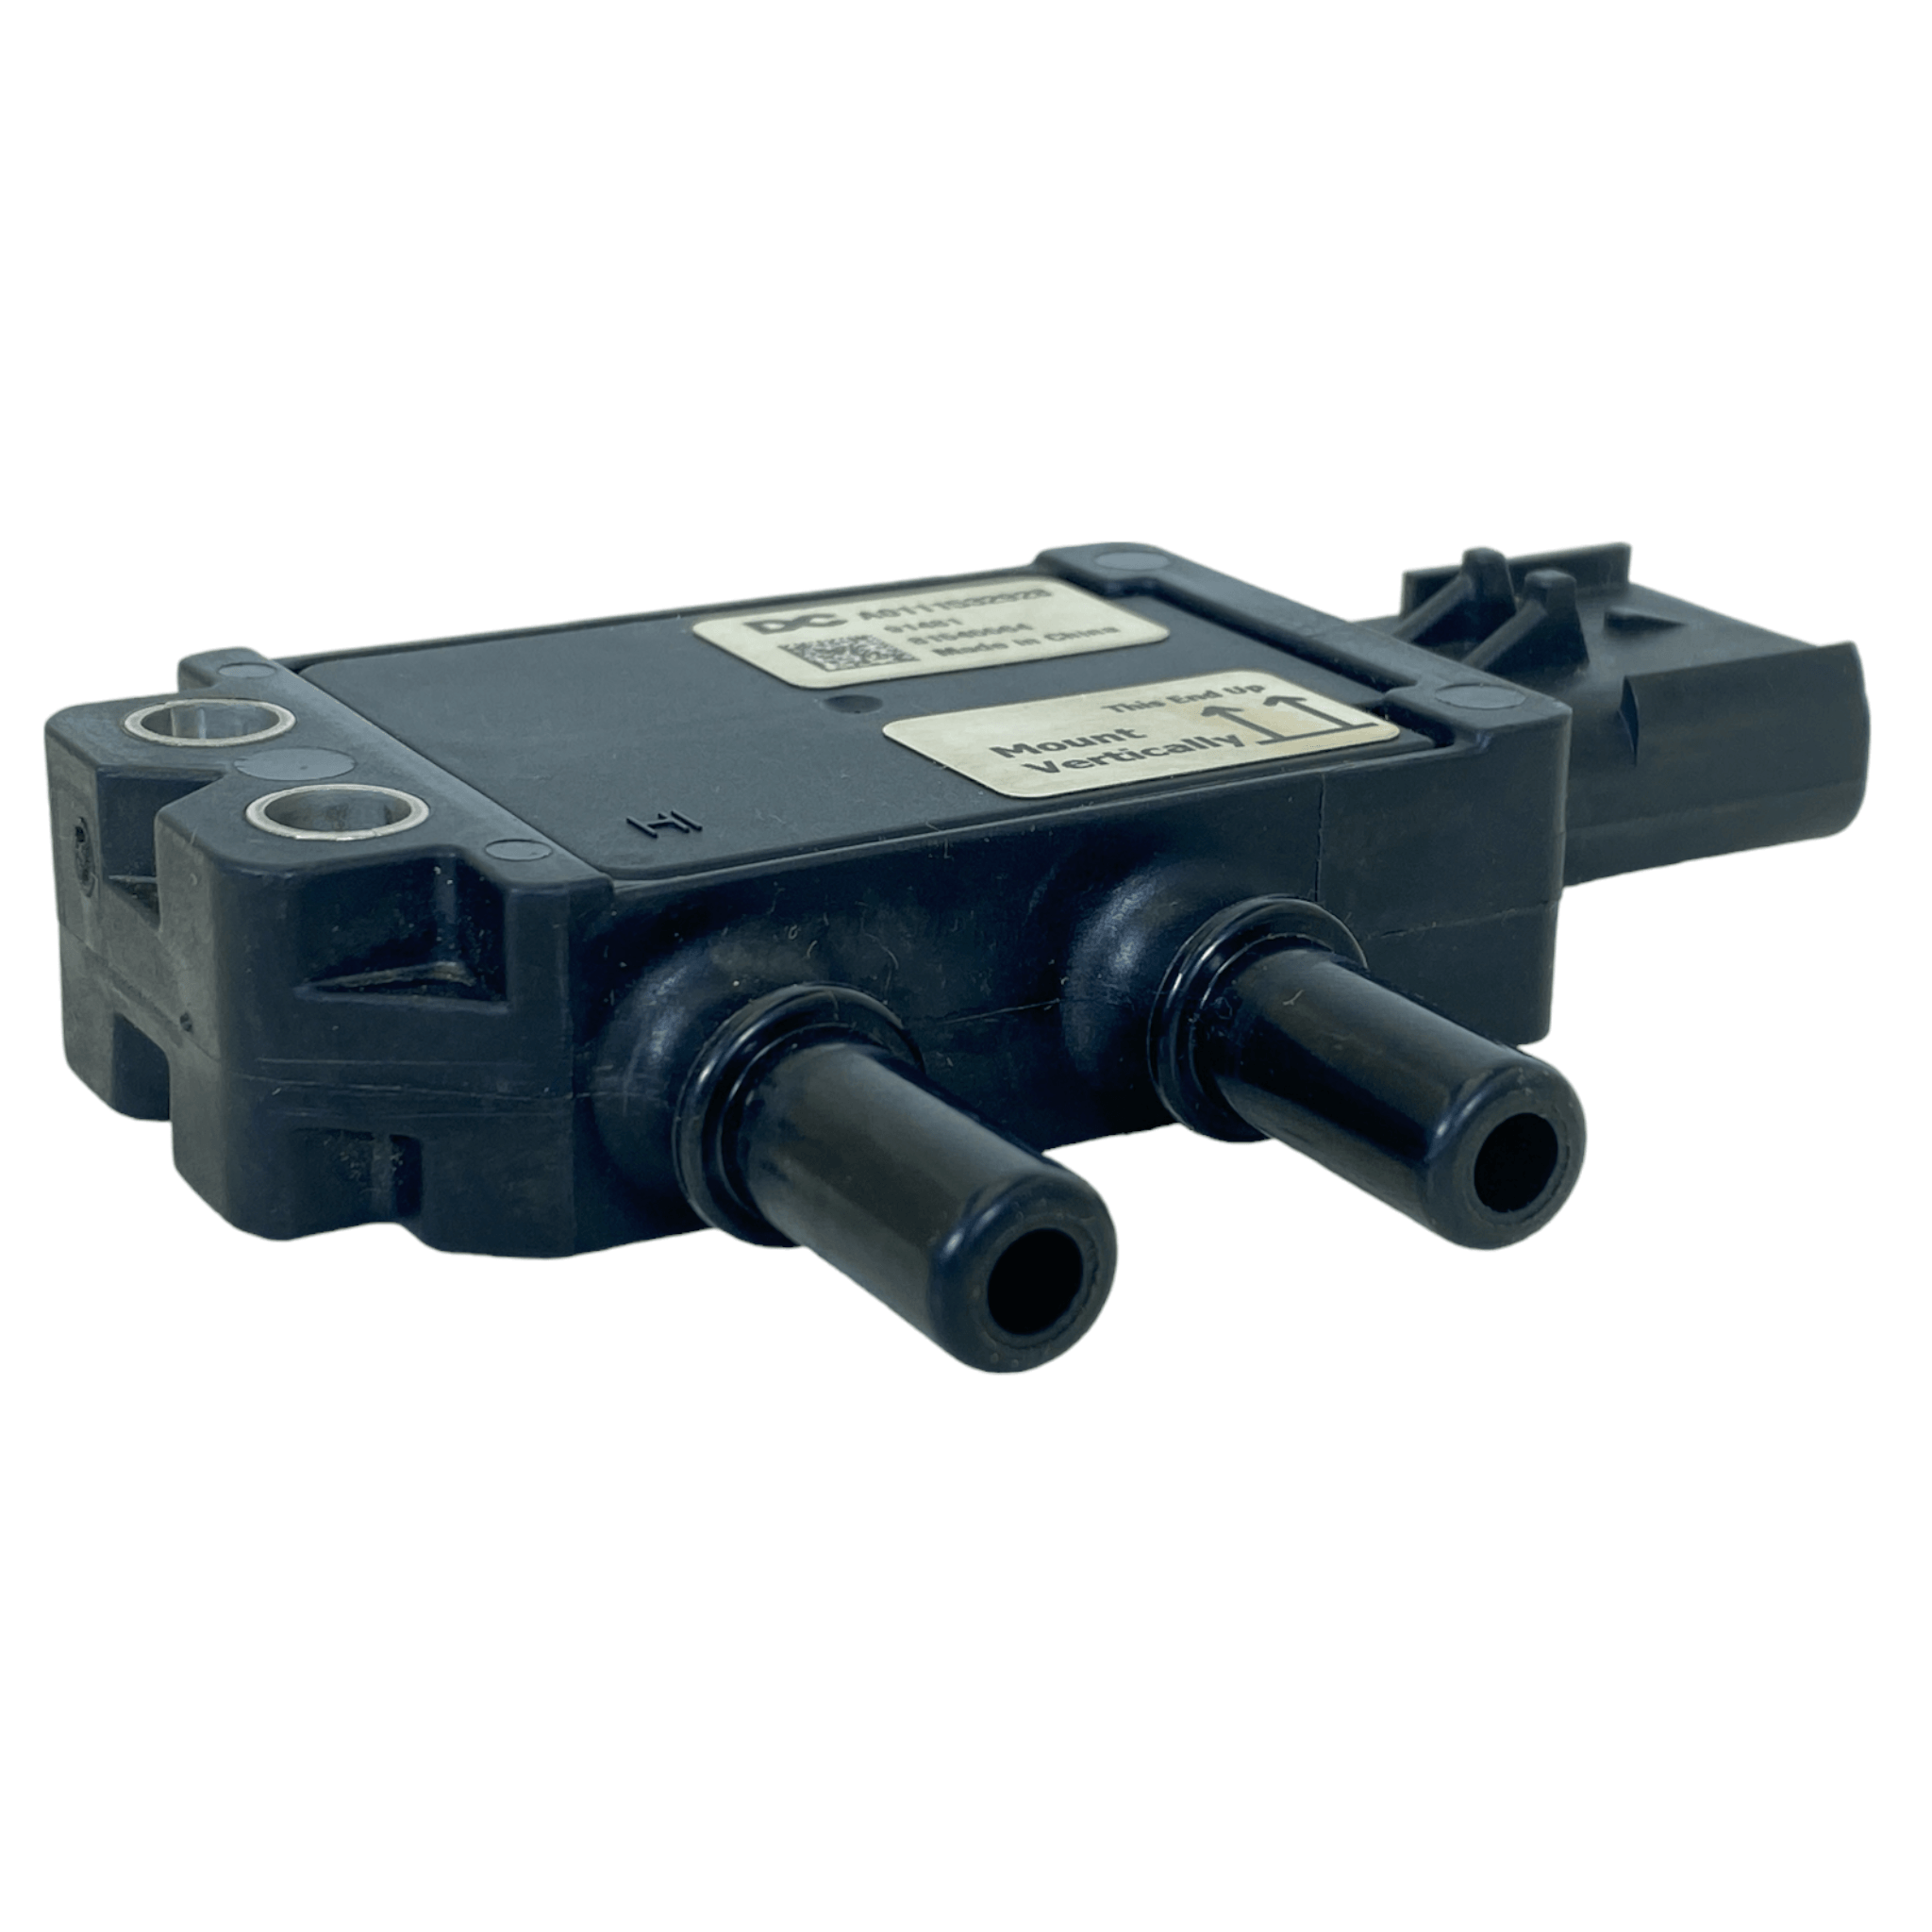 A0111532928 Oem Detroit Diesel Sensor - ADVANCED TRUCK PARTS